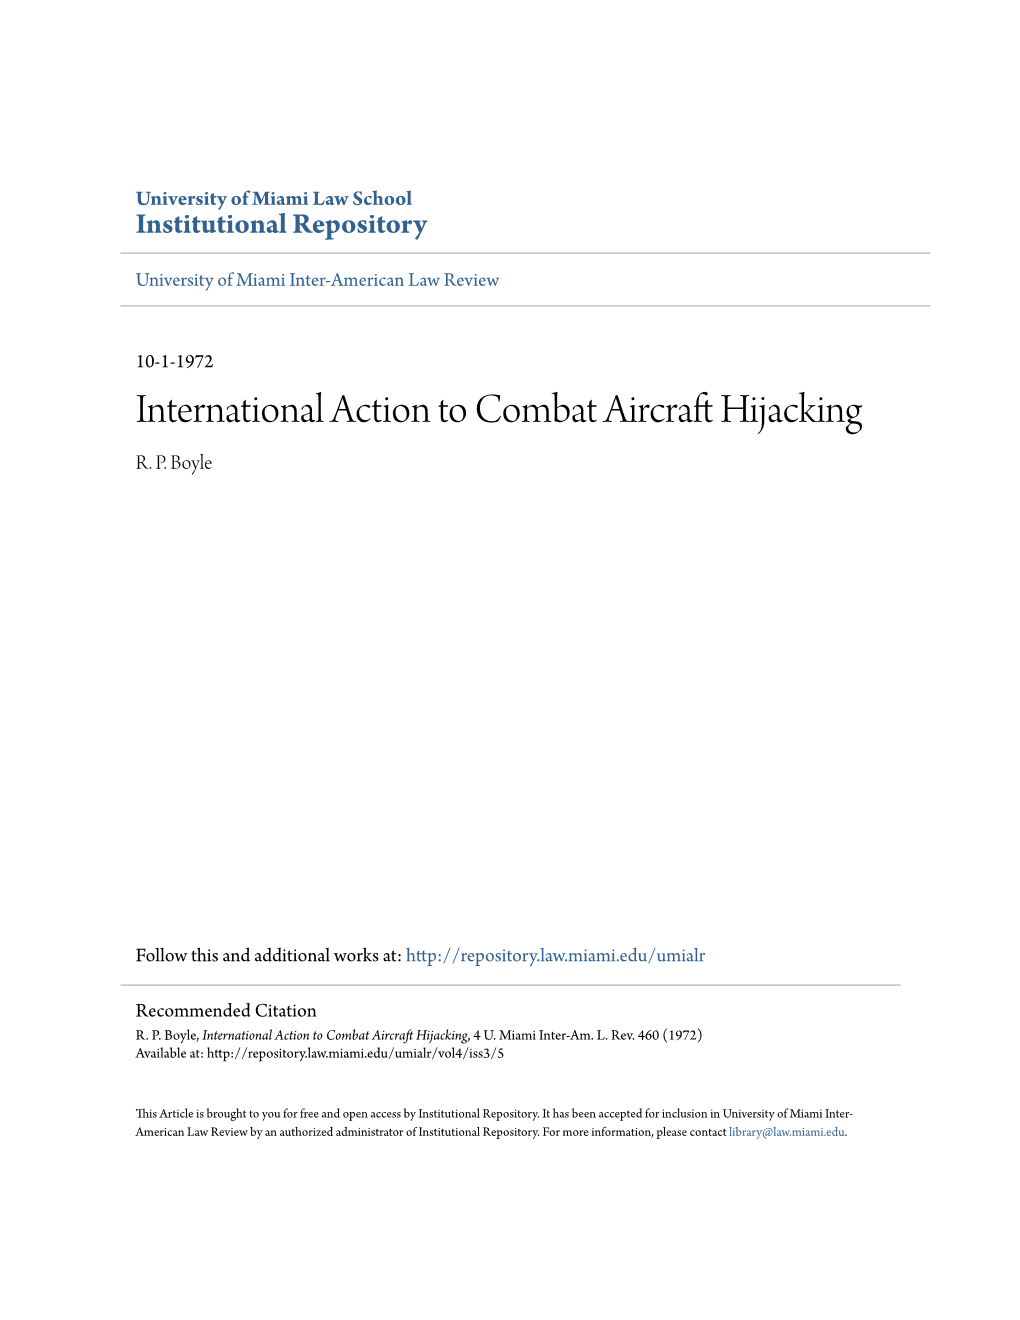 International Action to Combat Aircraft Hijacking*